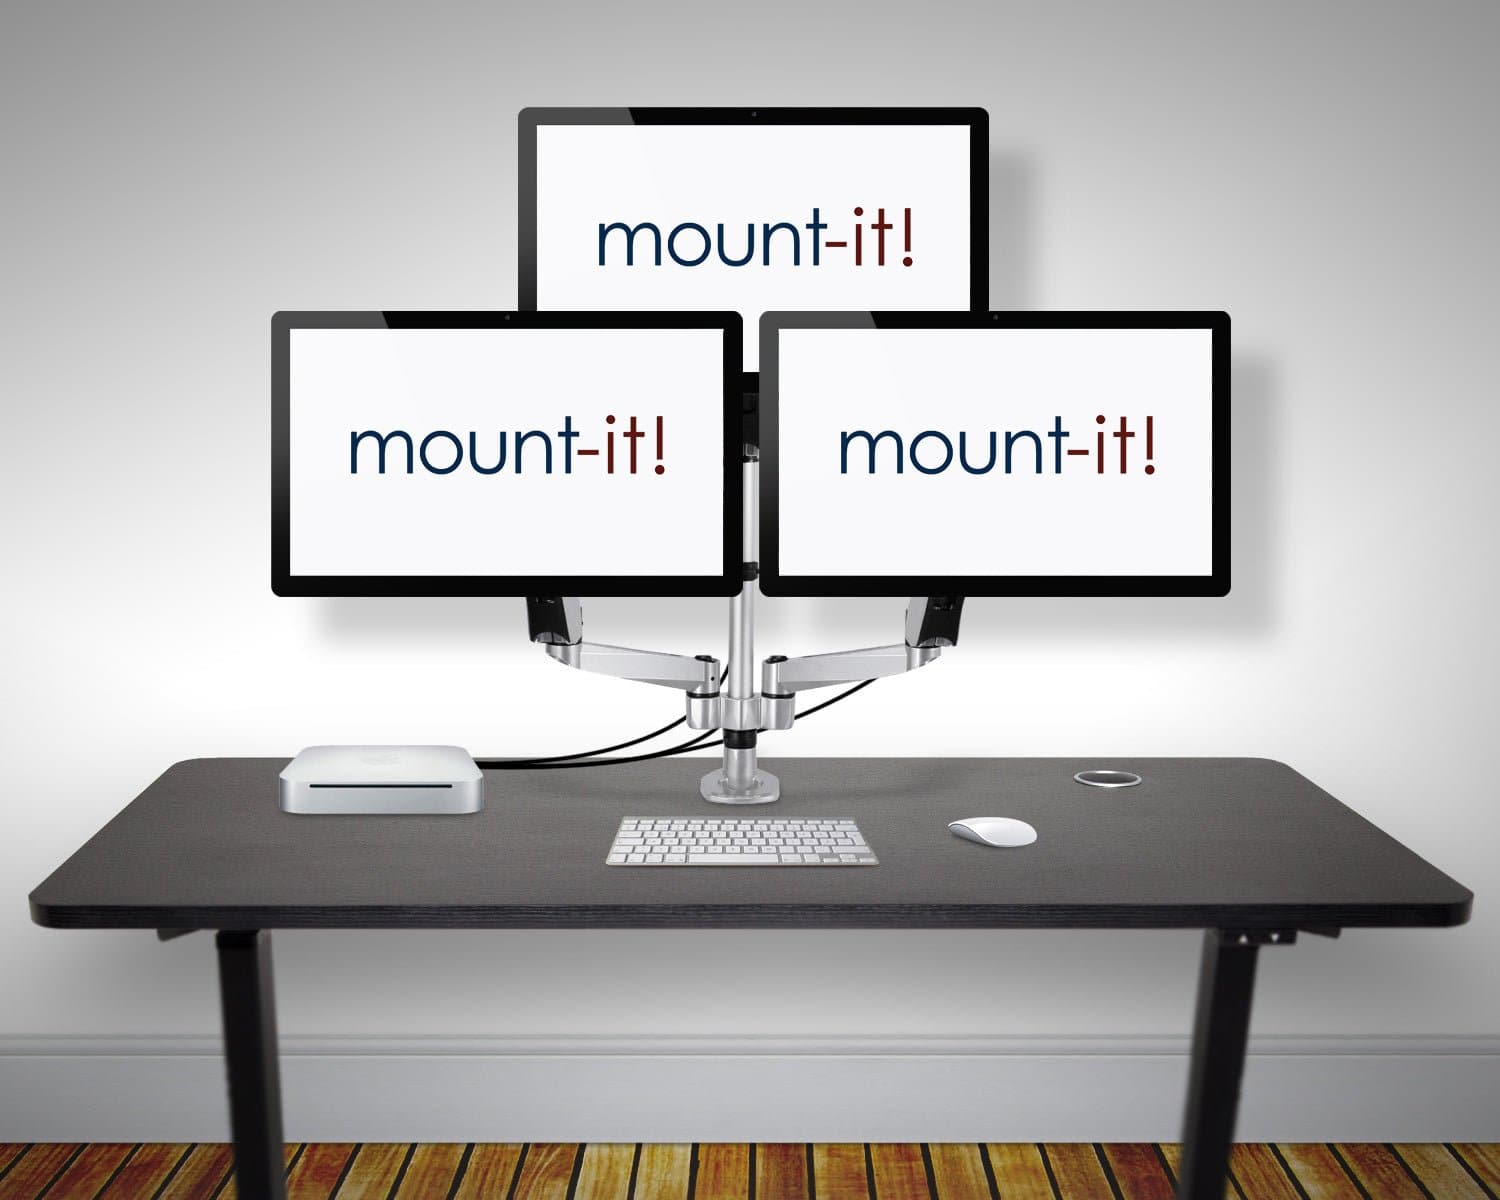 Full Motion Triple Pyramid Monitor Desk Mount - Mount-It!